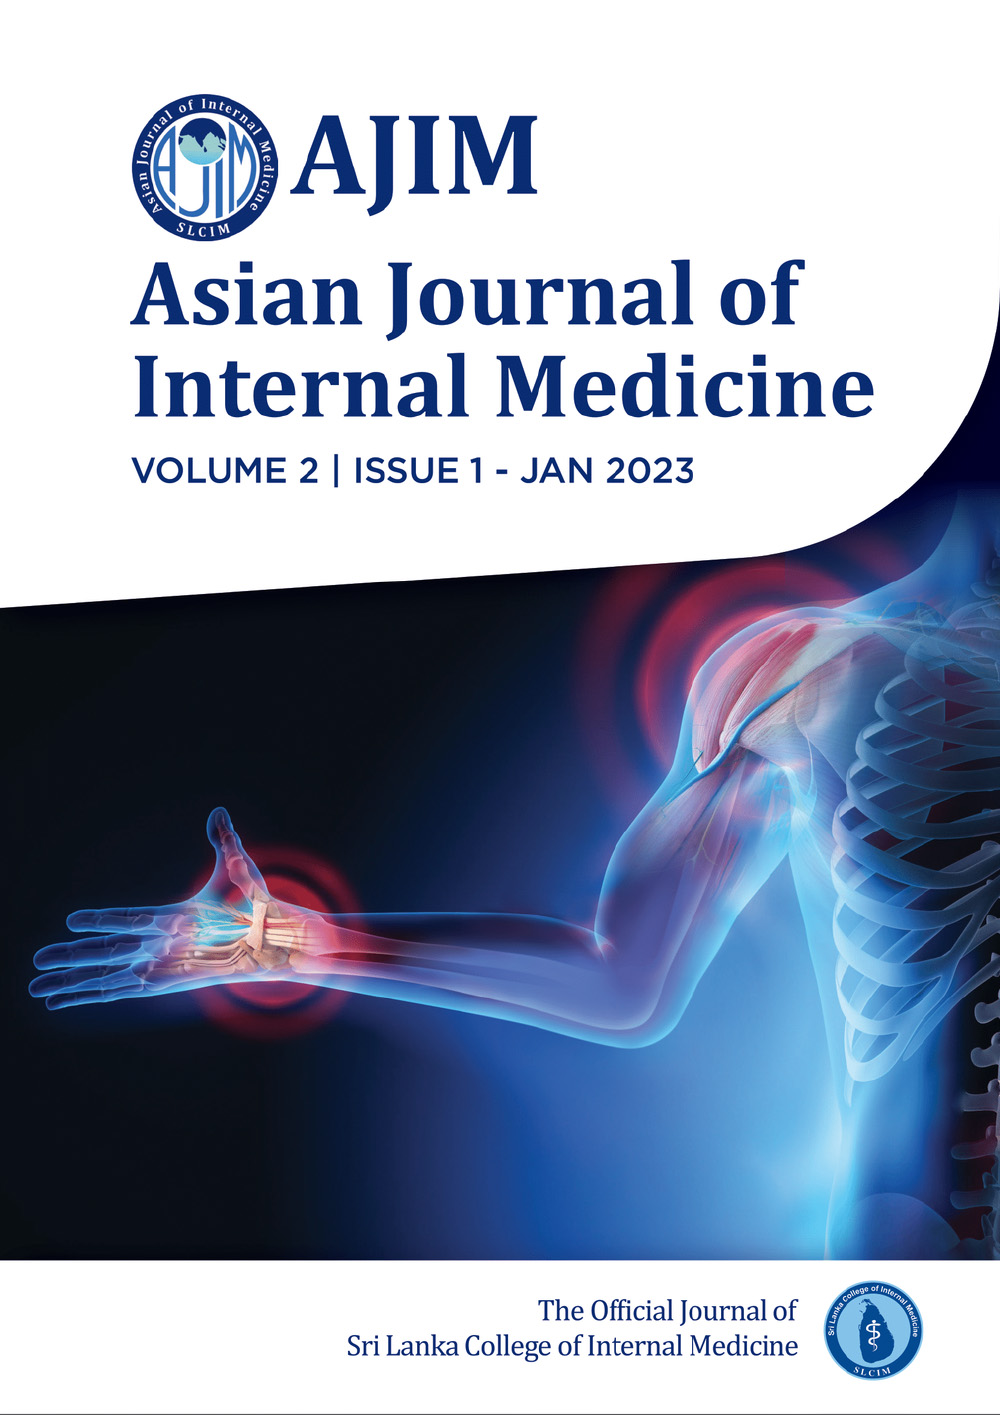 Asian Journal of Internal Medicine | Issue 2 | Volume 1 Jan 2023